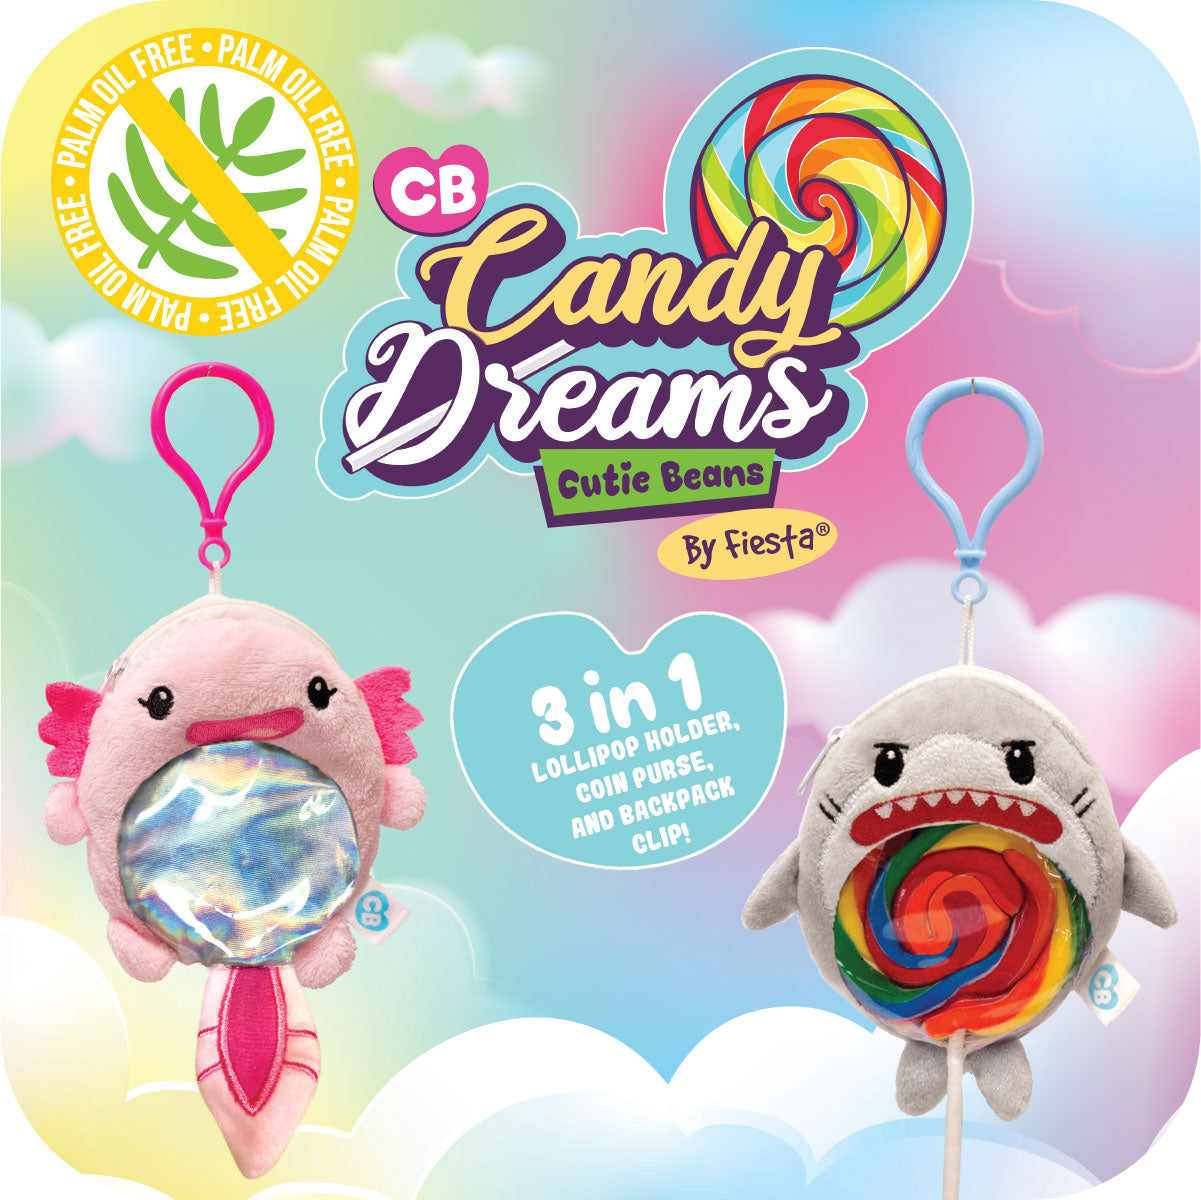 CB Candy Dreams